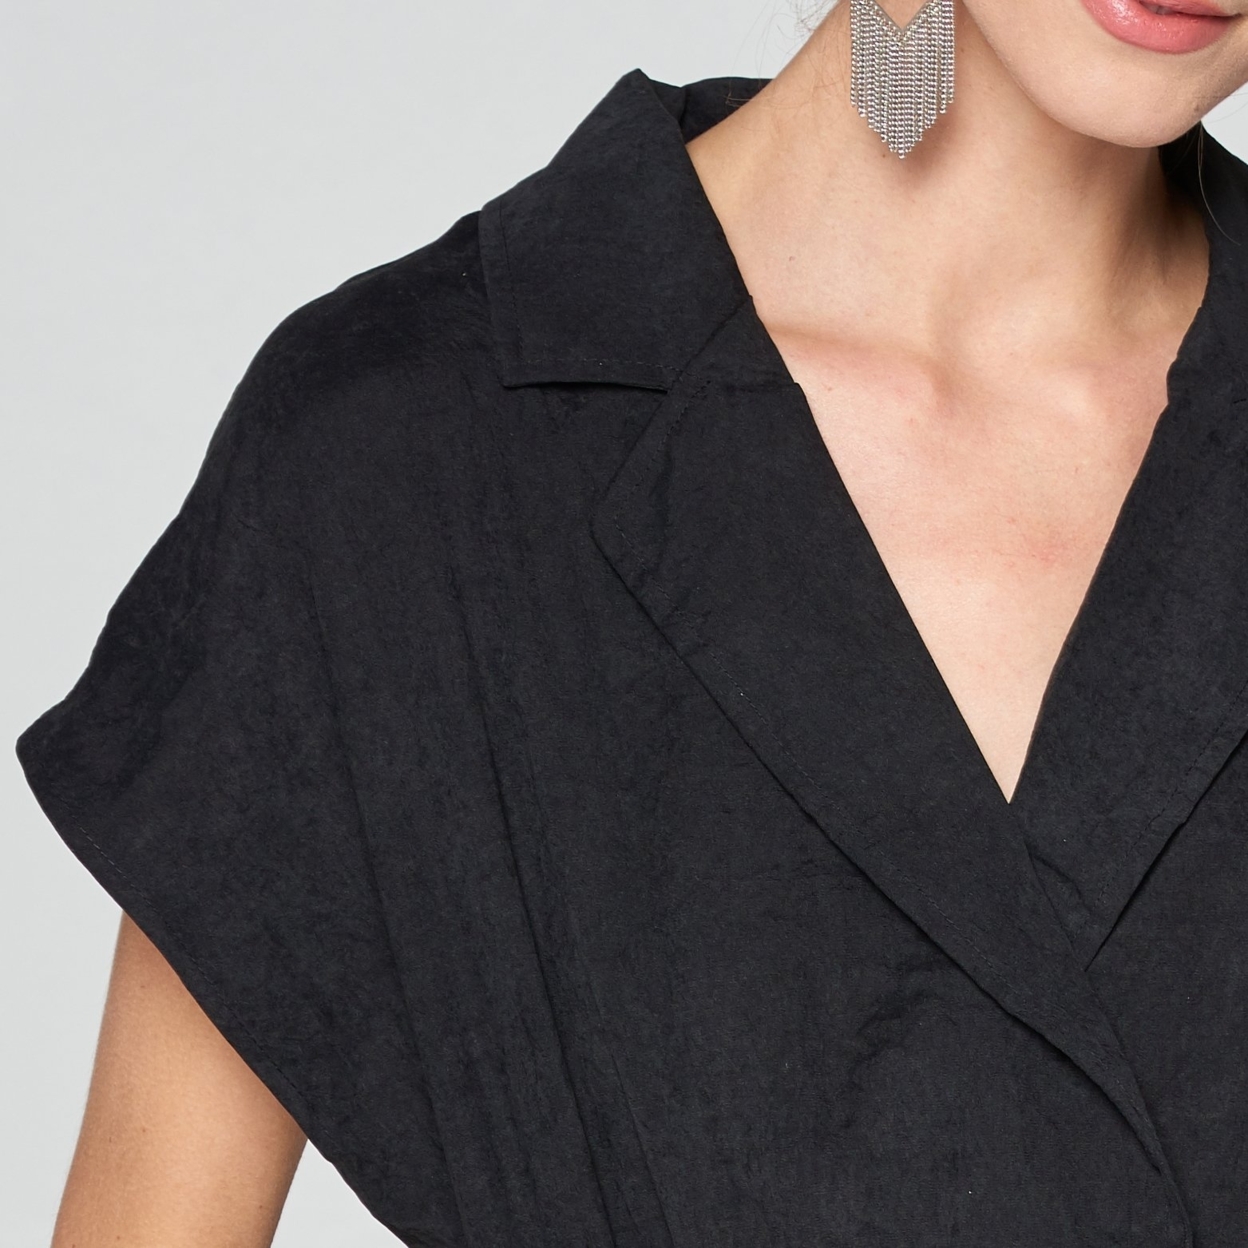 Kimono Cap Sleeve Jumpsuit - Black, Large (12-14)